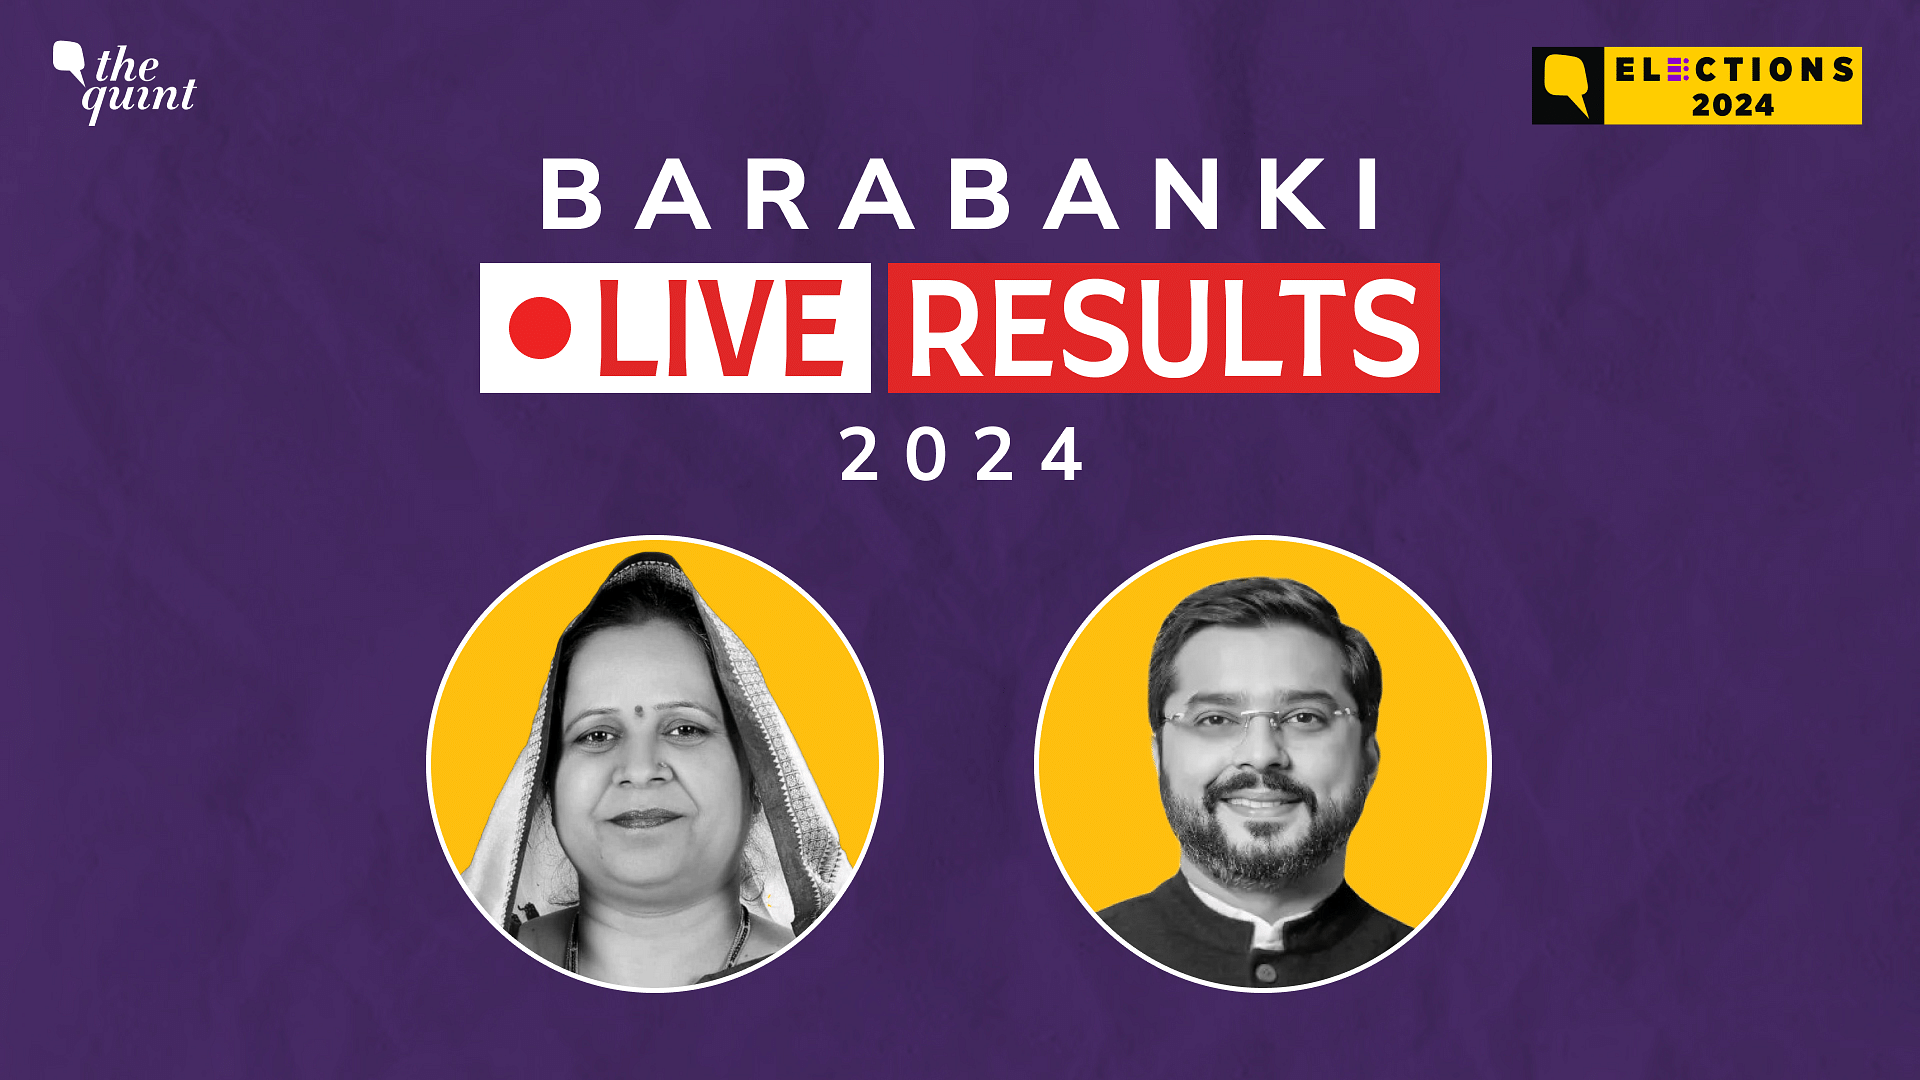 <div class="paragraphs"><p>Barabanki Election Result live updates for Lok Sabha election 2024</p></div>